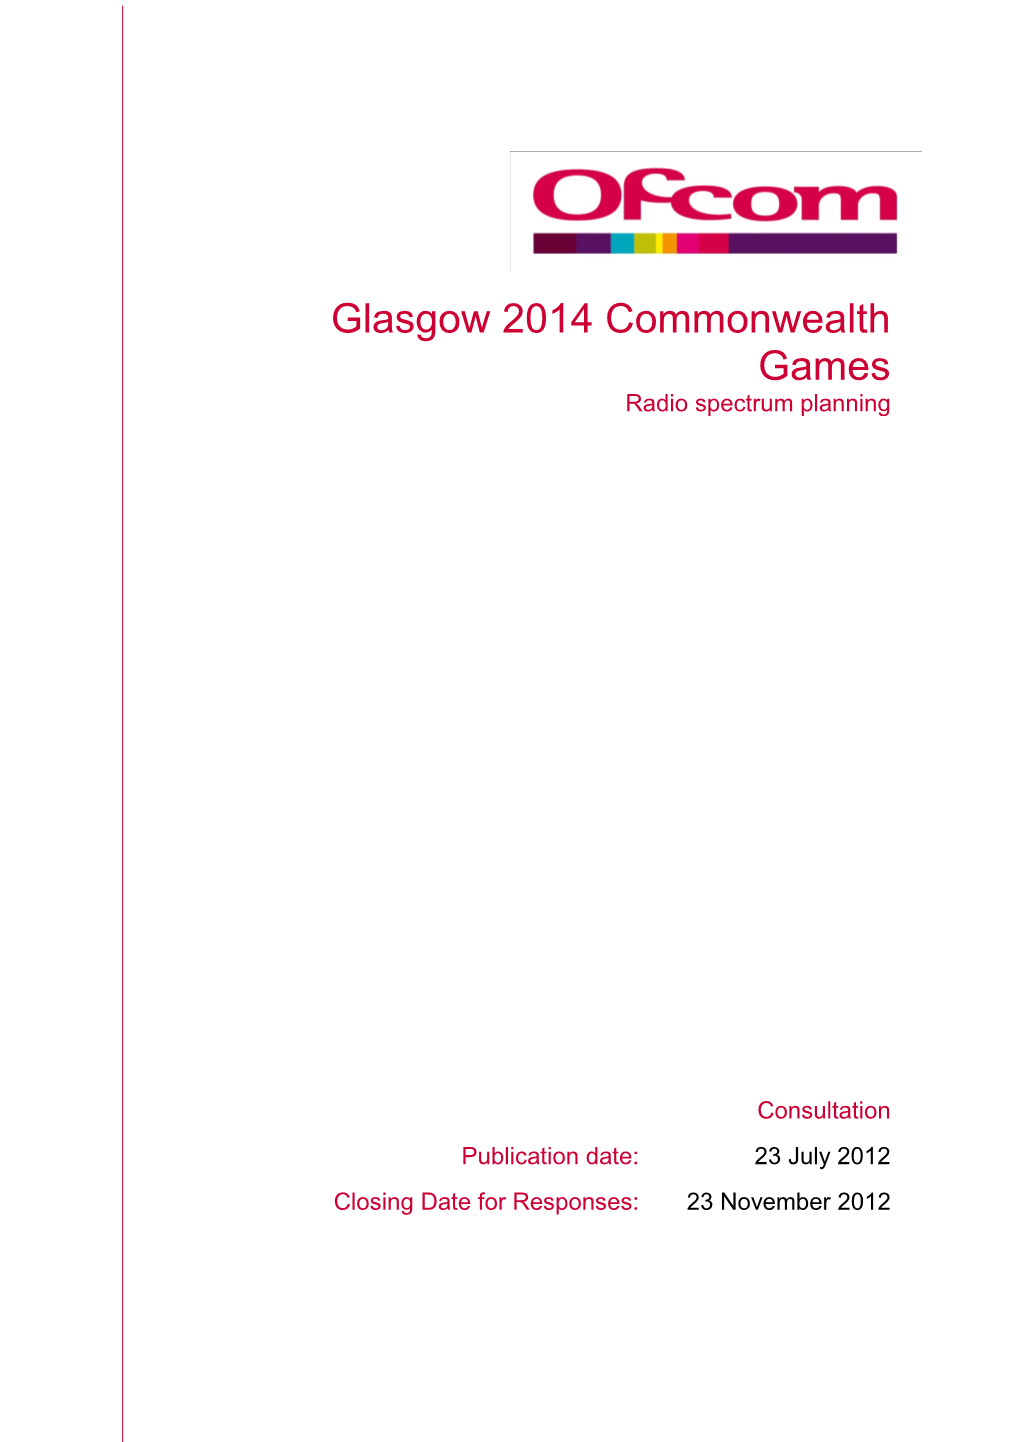 Glasgow 2014 Commonwealth Games Radio Spectrum Planning